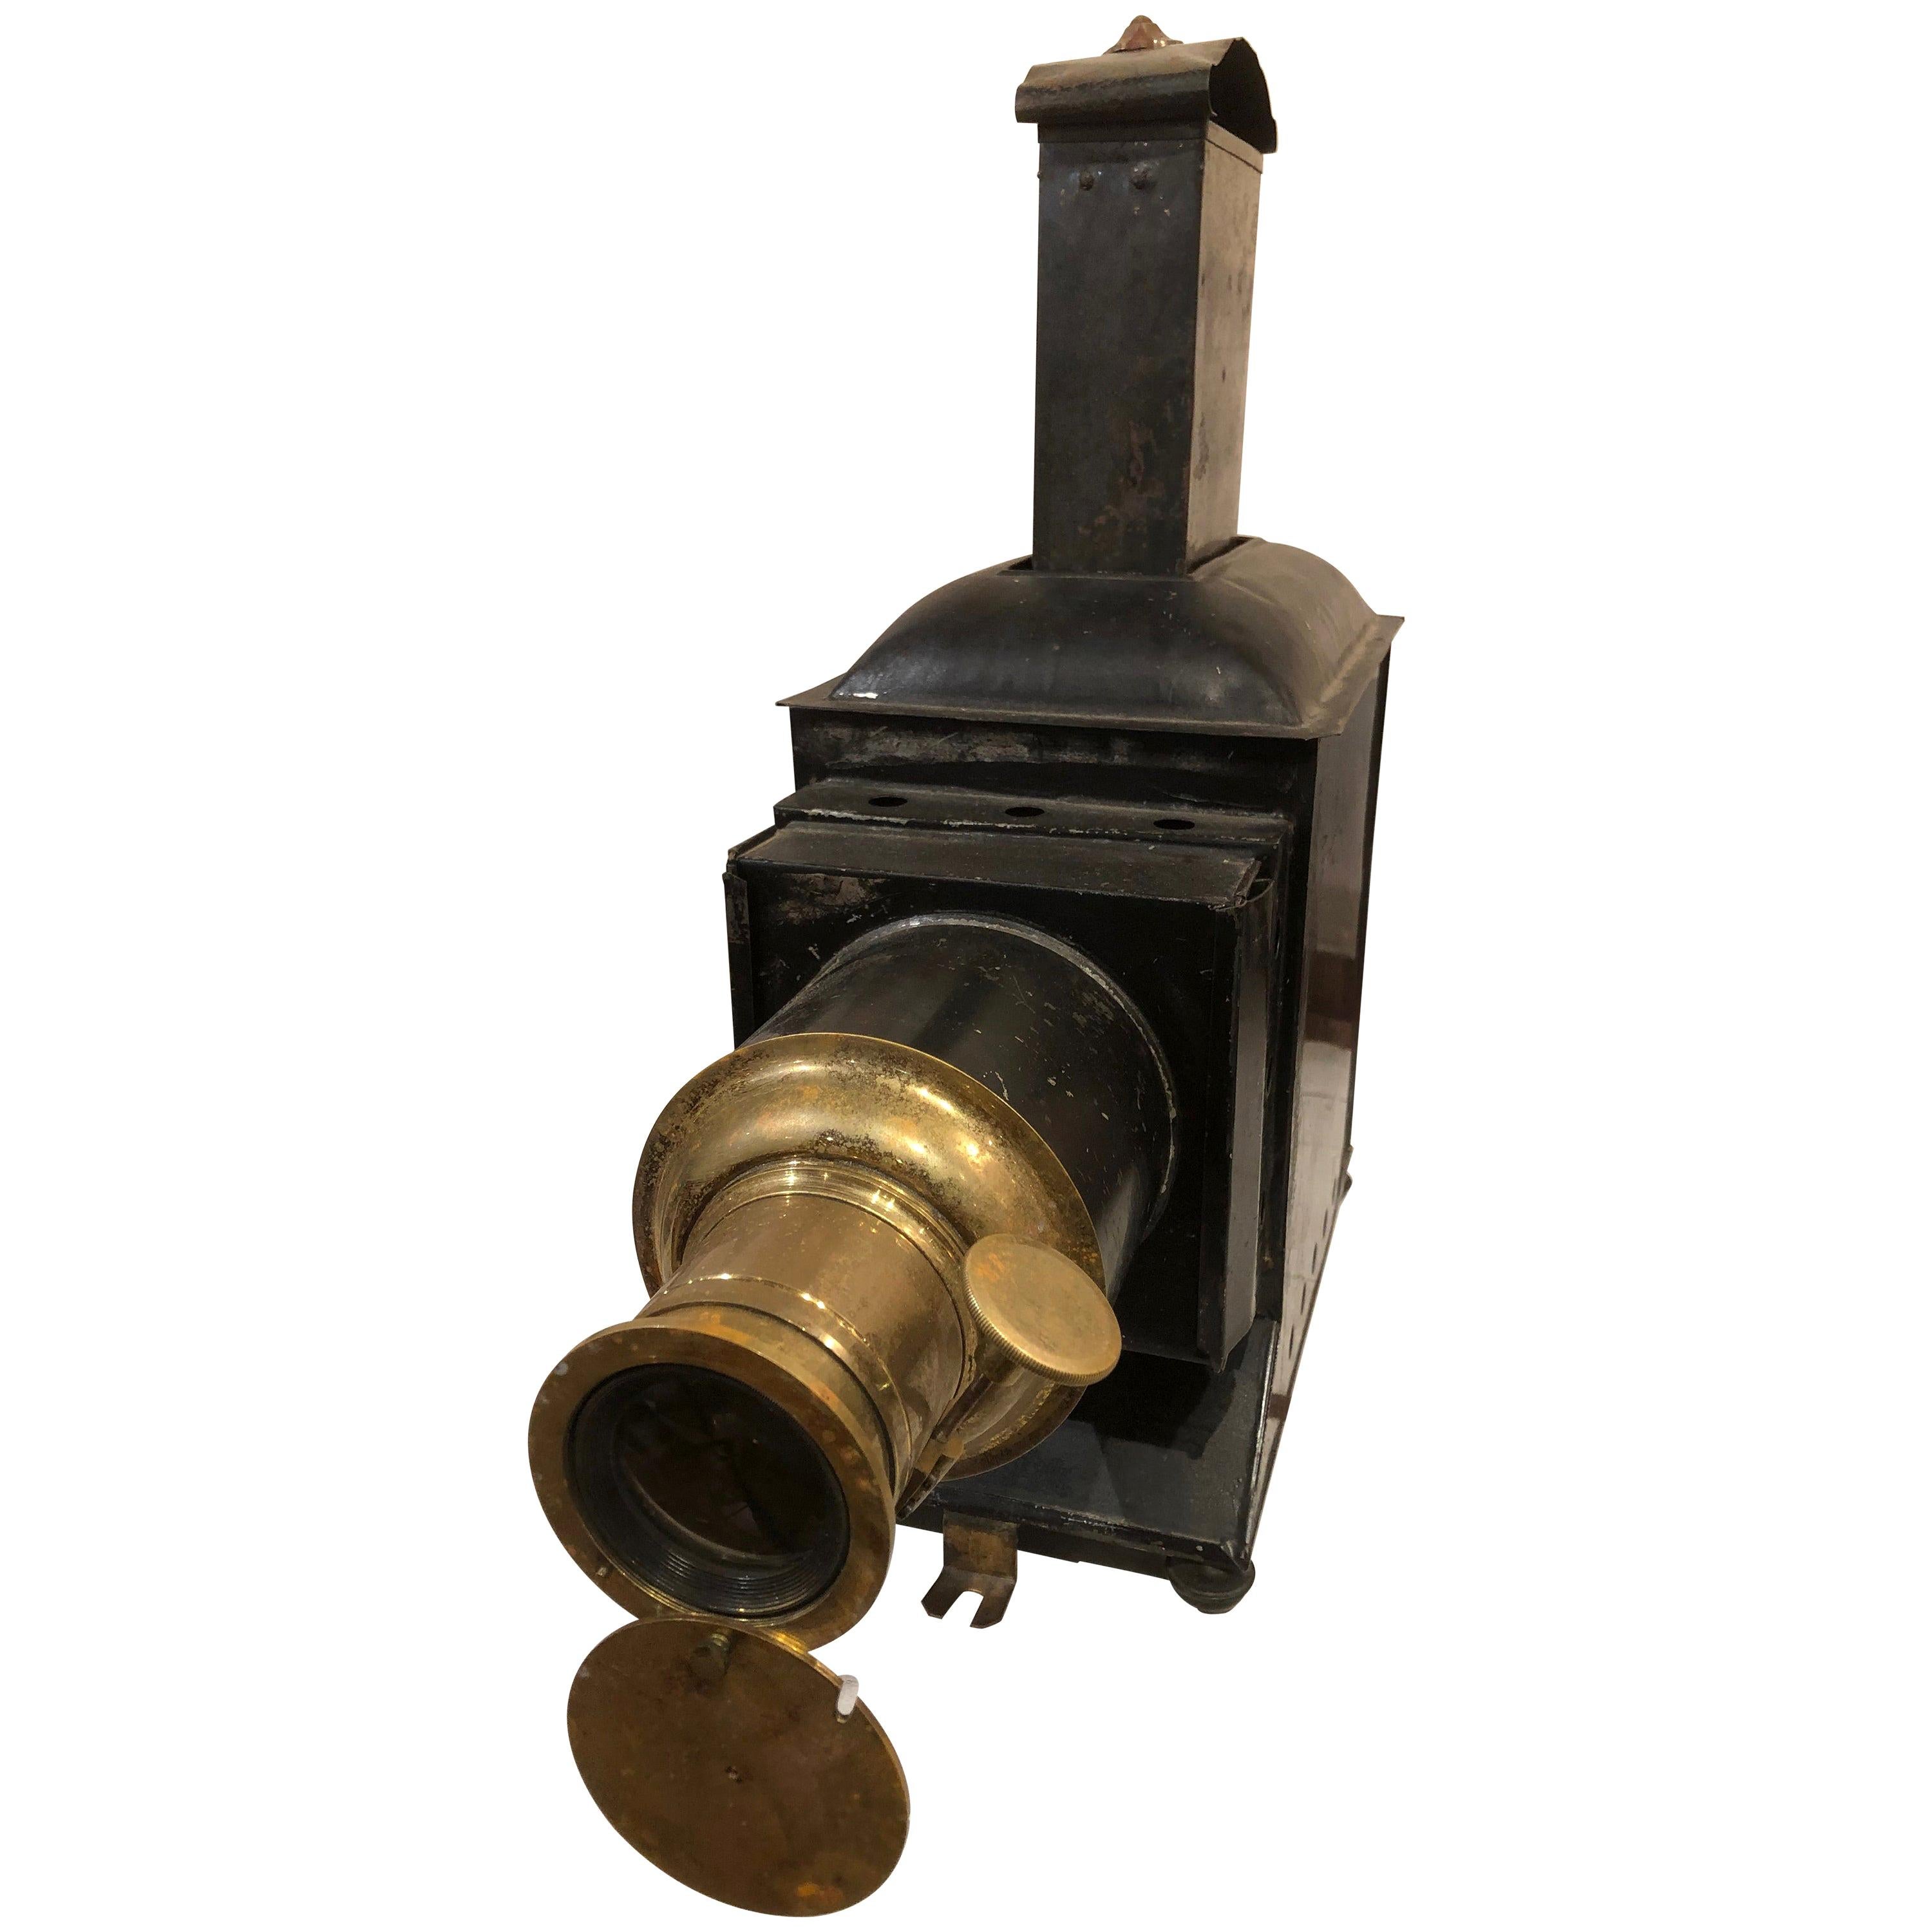 19th Century German Brass “Magic Lantern” Image Projector